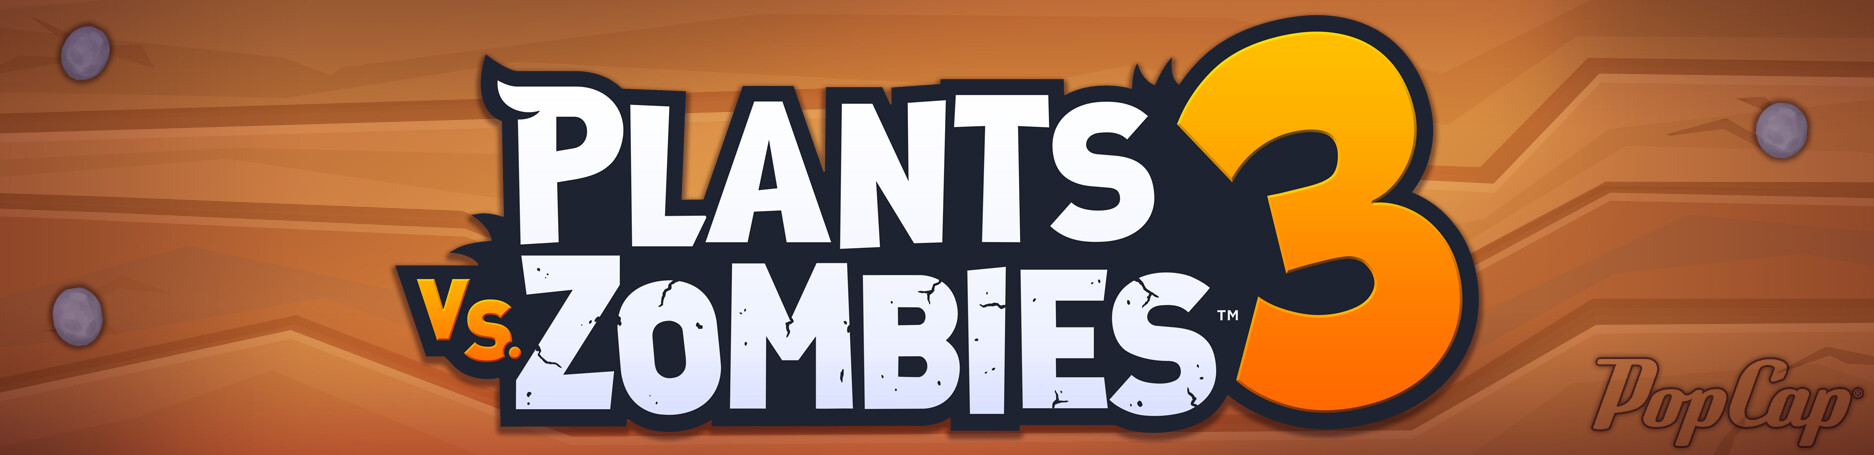 ArtStation - Plants vs Zombies 3 UI